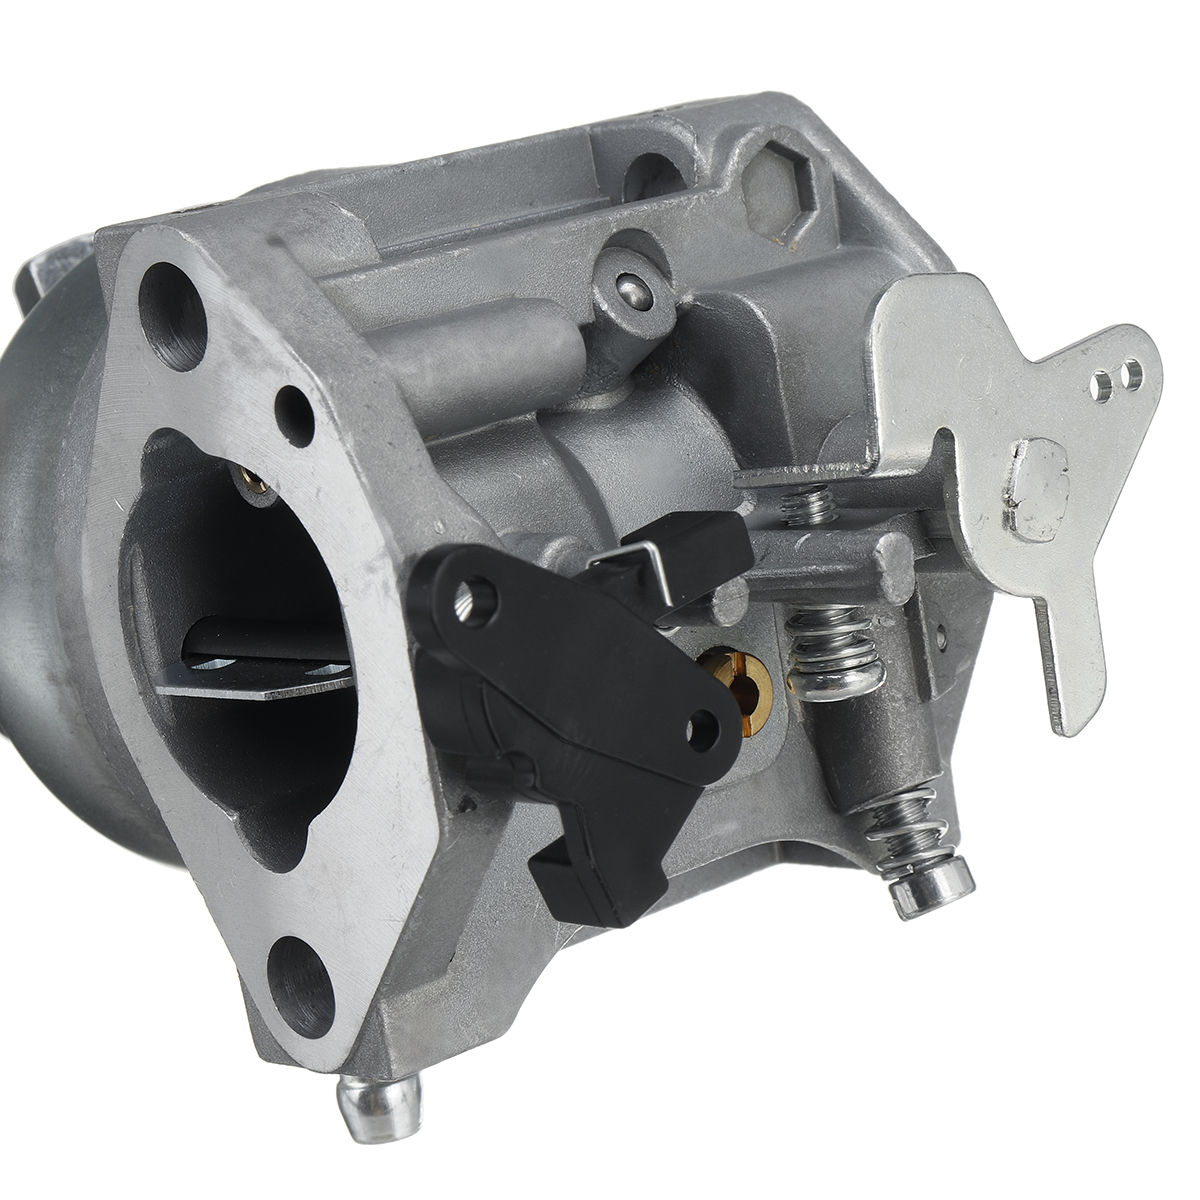 Carburetor-Intake-Kit-Air-Filter-Gaskets-with-Fuel-Line-for-Honda-GCV160-GCV135-Mower-Engine-HRU19R--1842970-8